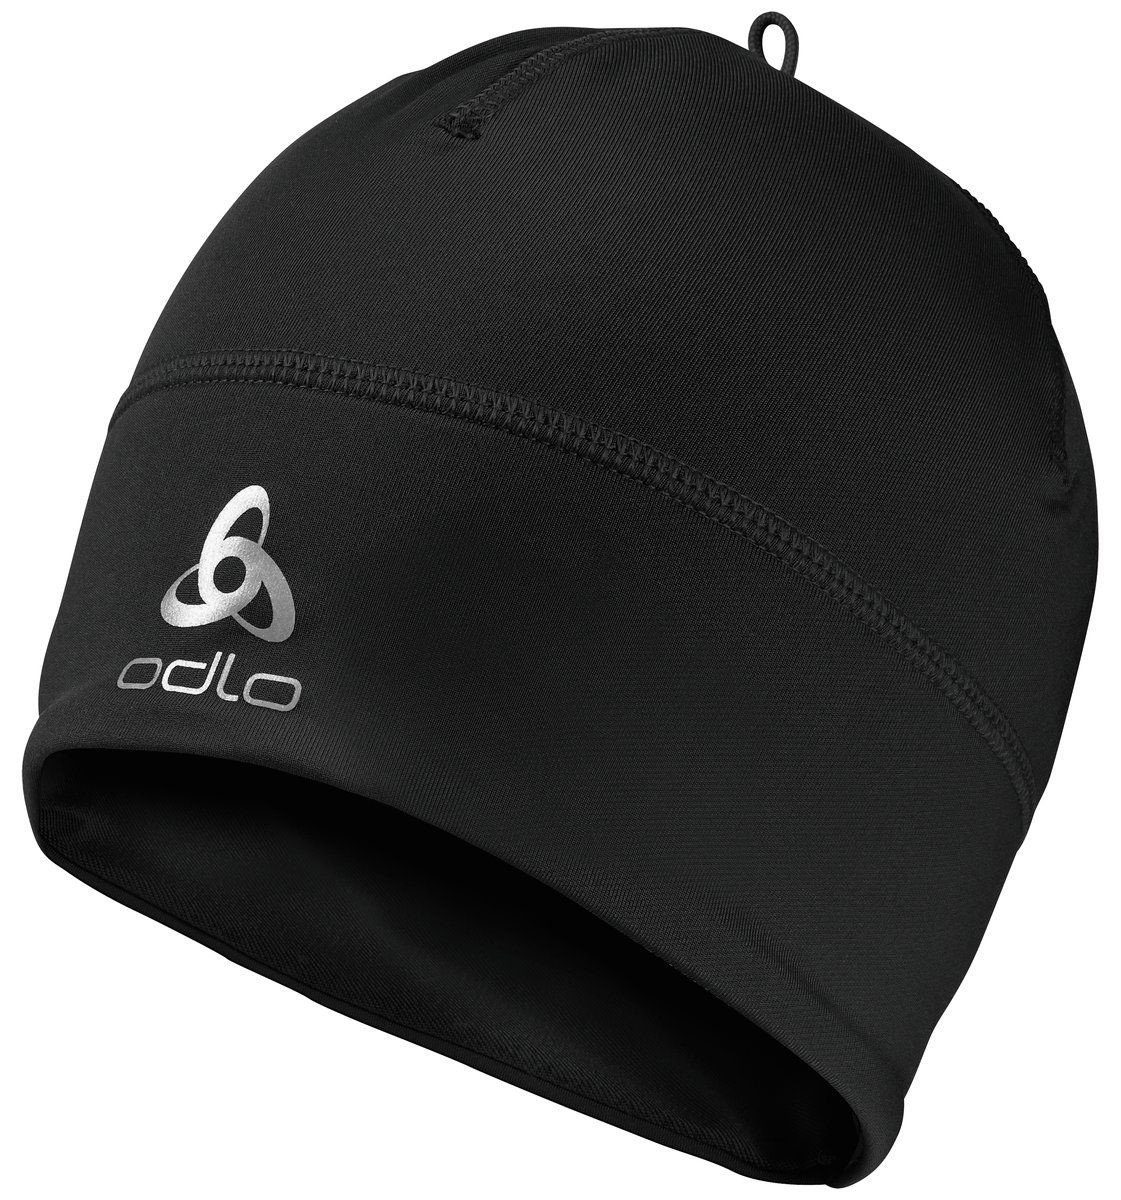 Odlo Baseball Cap Hat POLYKNIT WARM ECO 15000 black